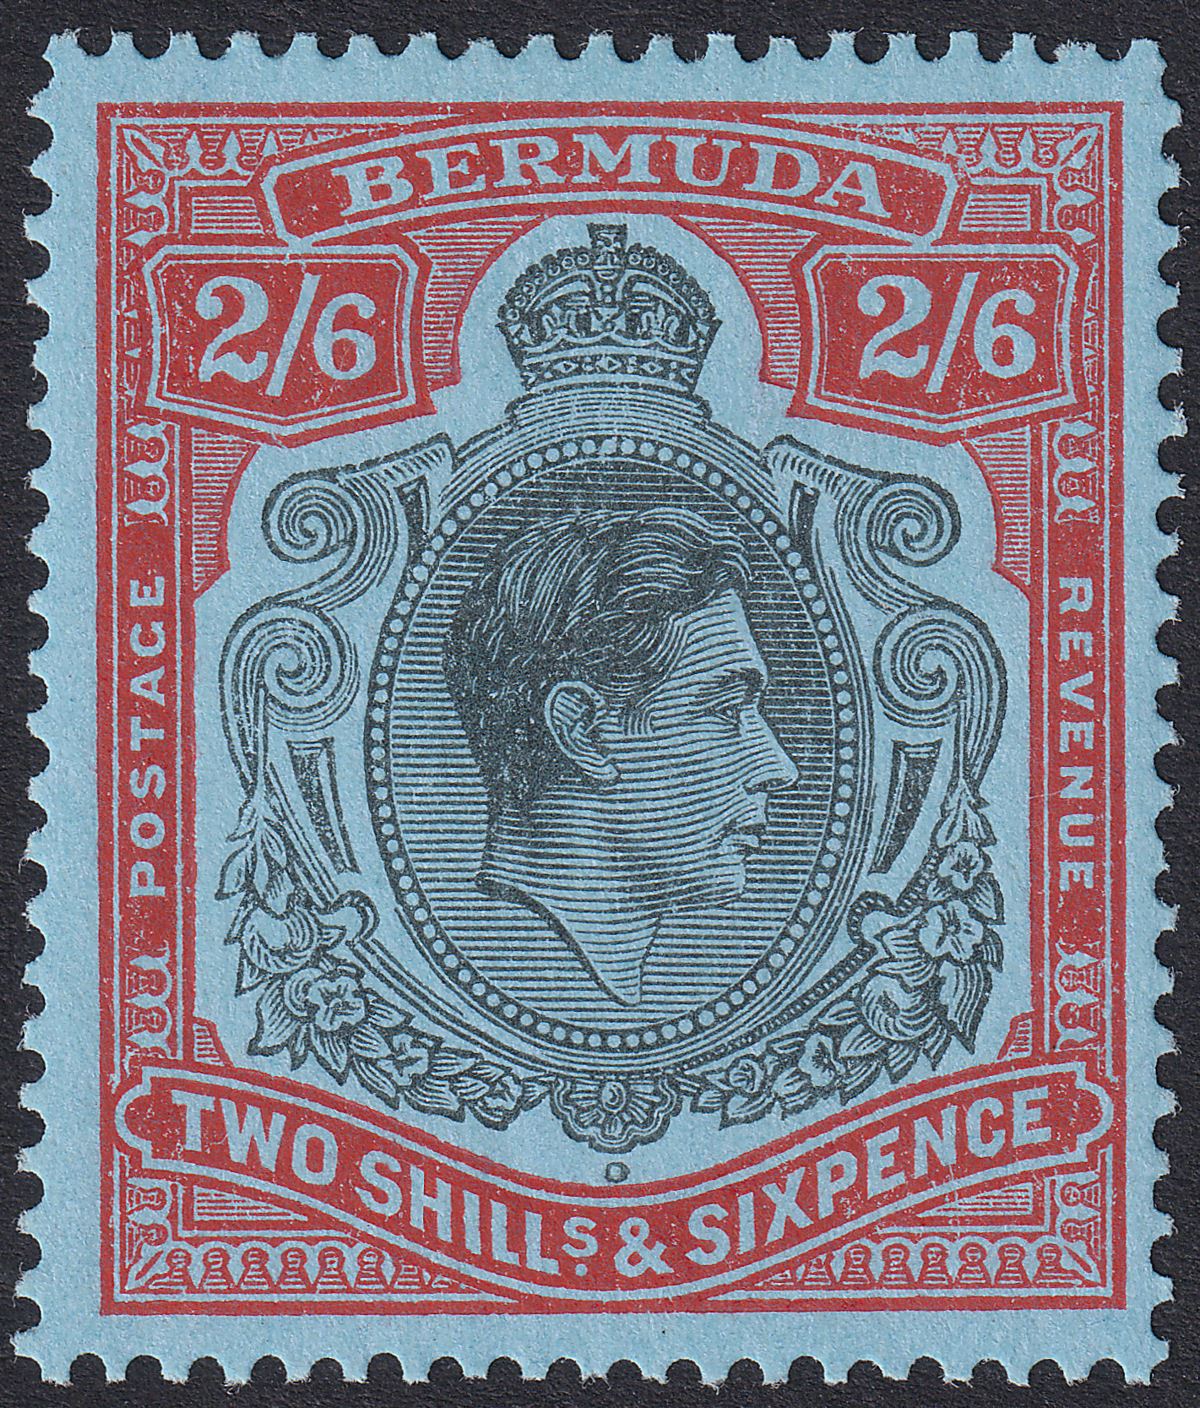 Bermuda 1952 KGVI 2sh6d Black and Carmine-Red on Pale Blue p13 Mint SG117d